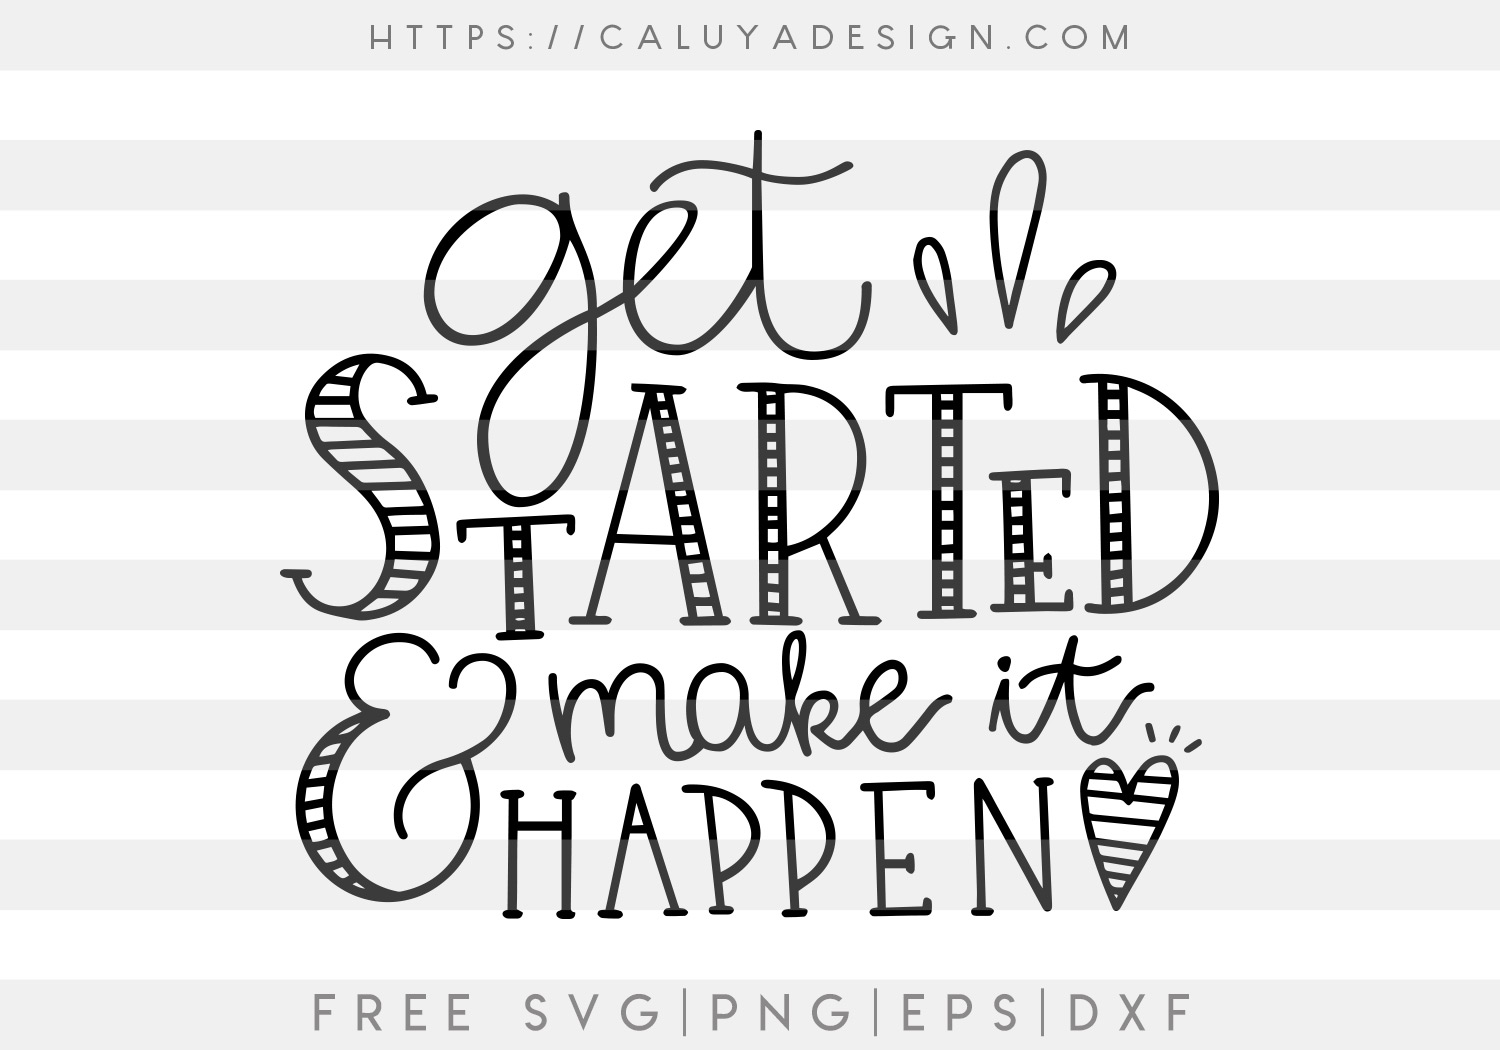 Get Started And Make It Happen SVG, PNG, EPS & DXF